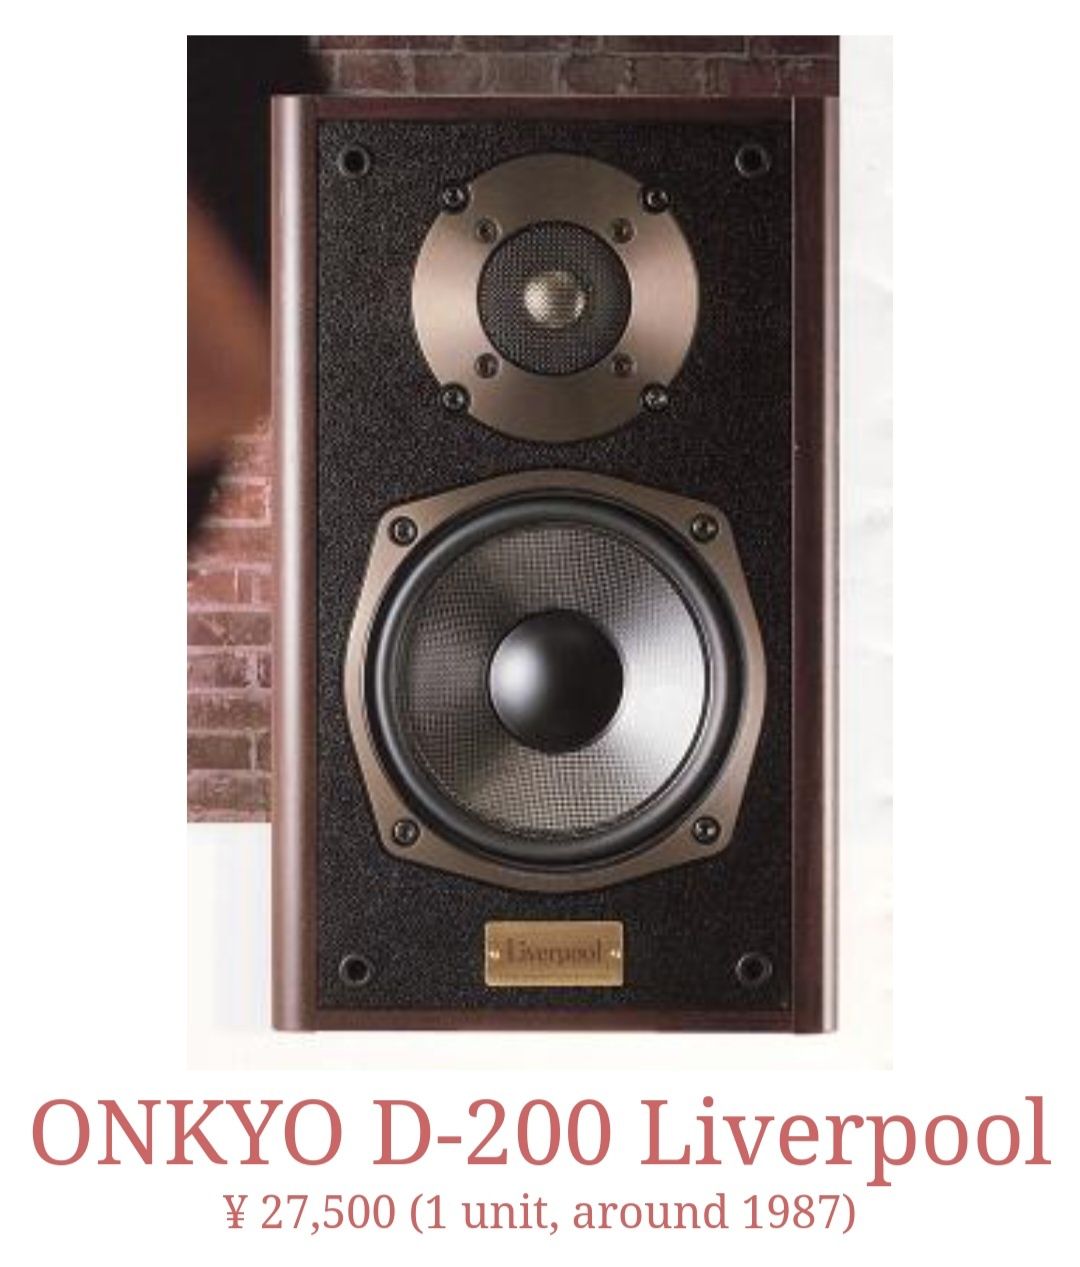 Onkyo Liverpool D-200 акустическая система Hi-Fi